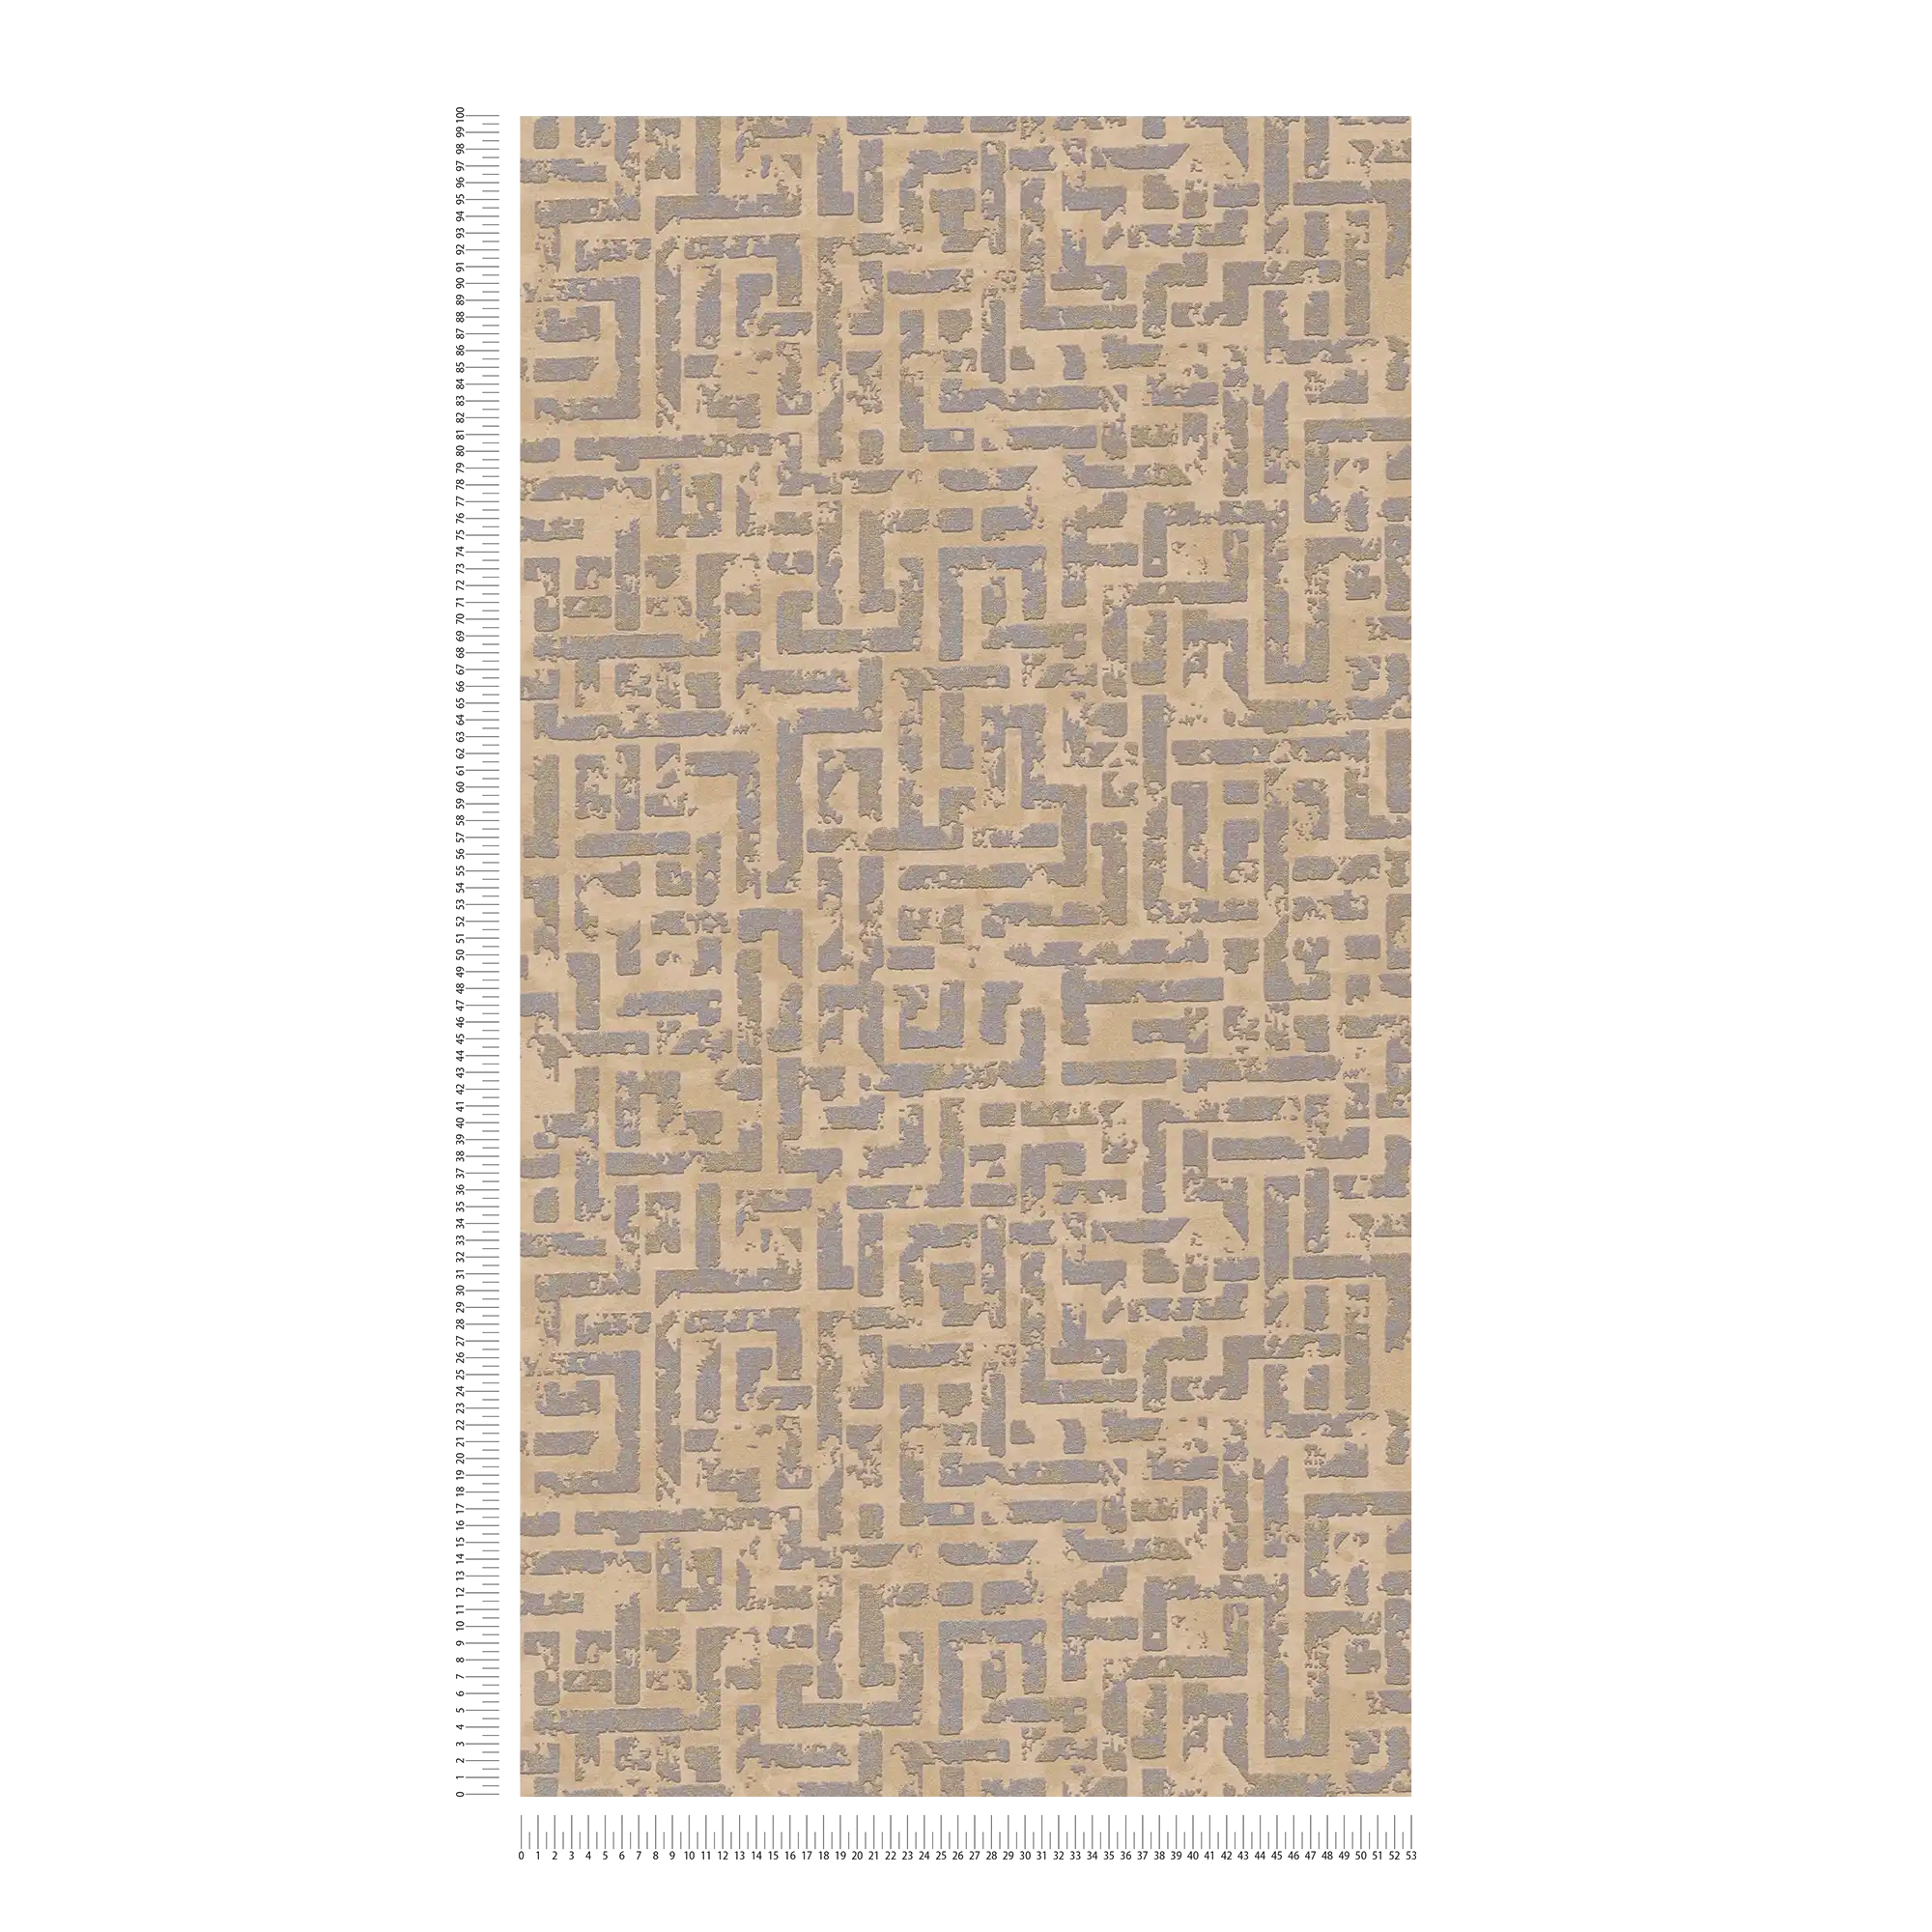             Wallpaper graphic pattern with relief design - beige, metallic
        